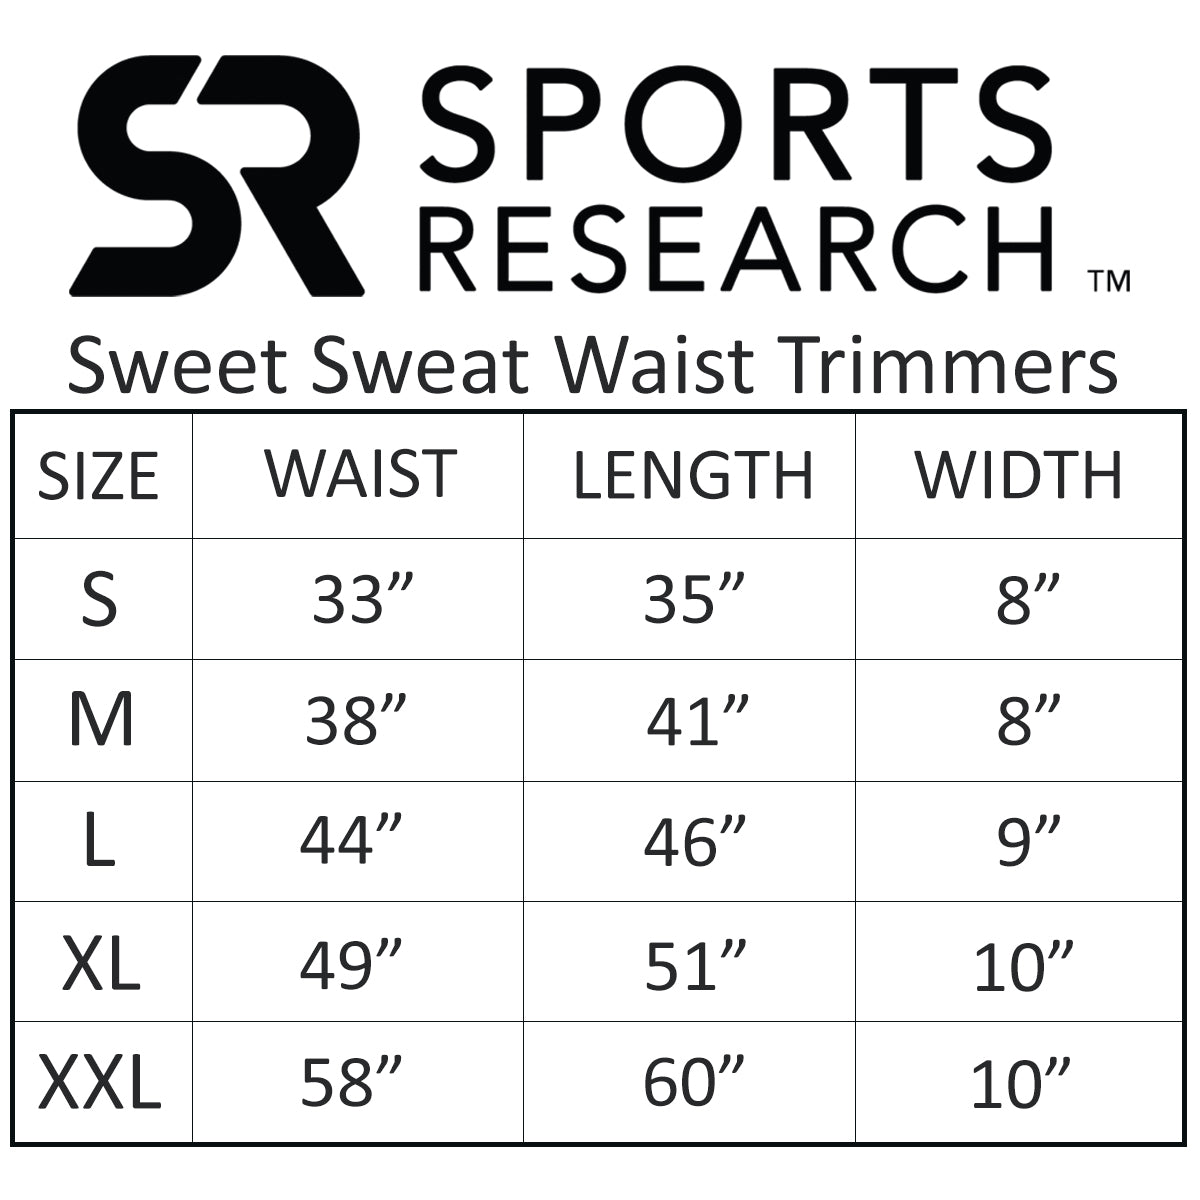 Sweet Sweat Waist Trainer, Shop Today. Get it Tomorrow!